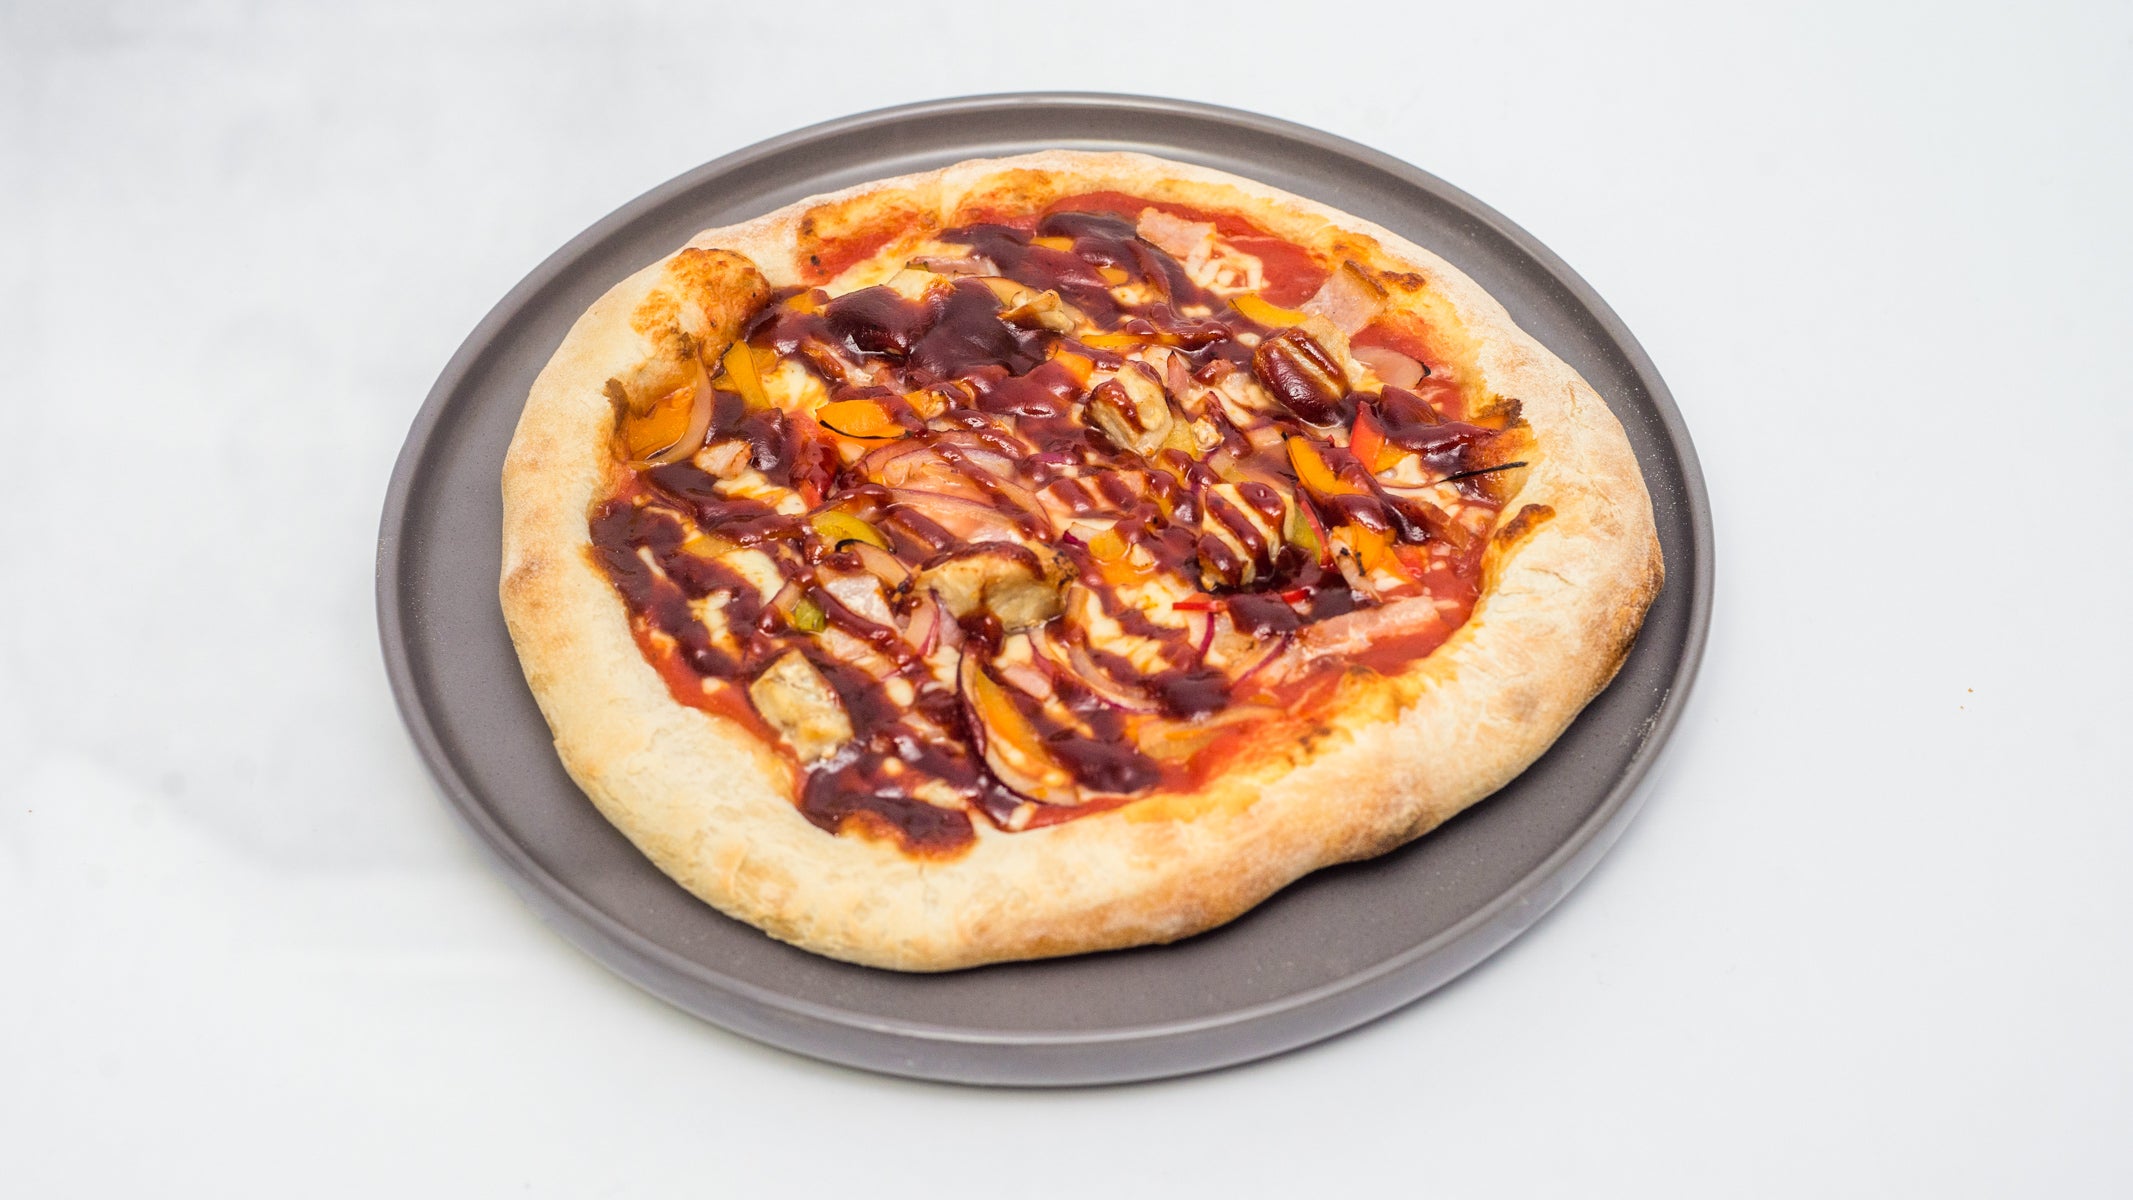 Slice'd Pizza & Pasta